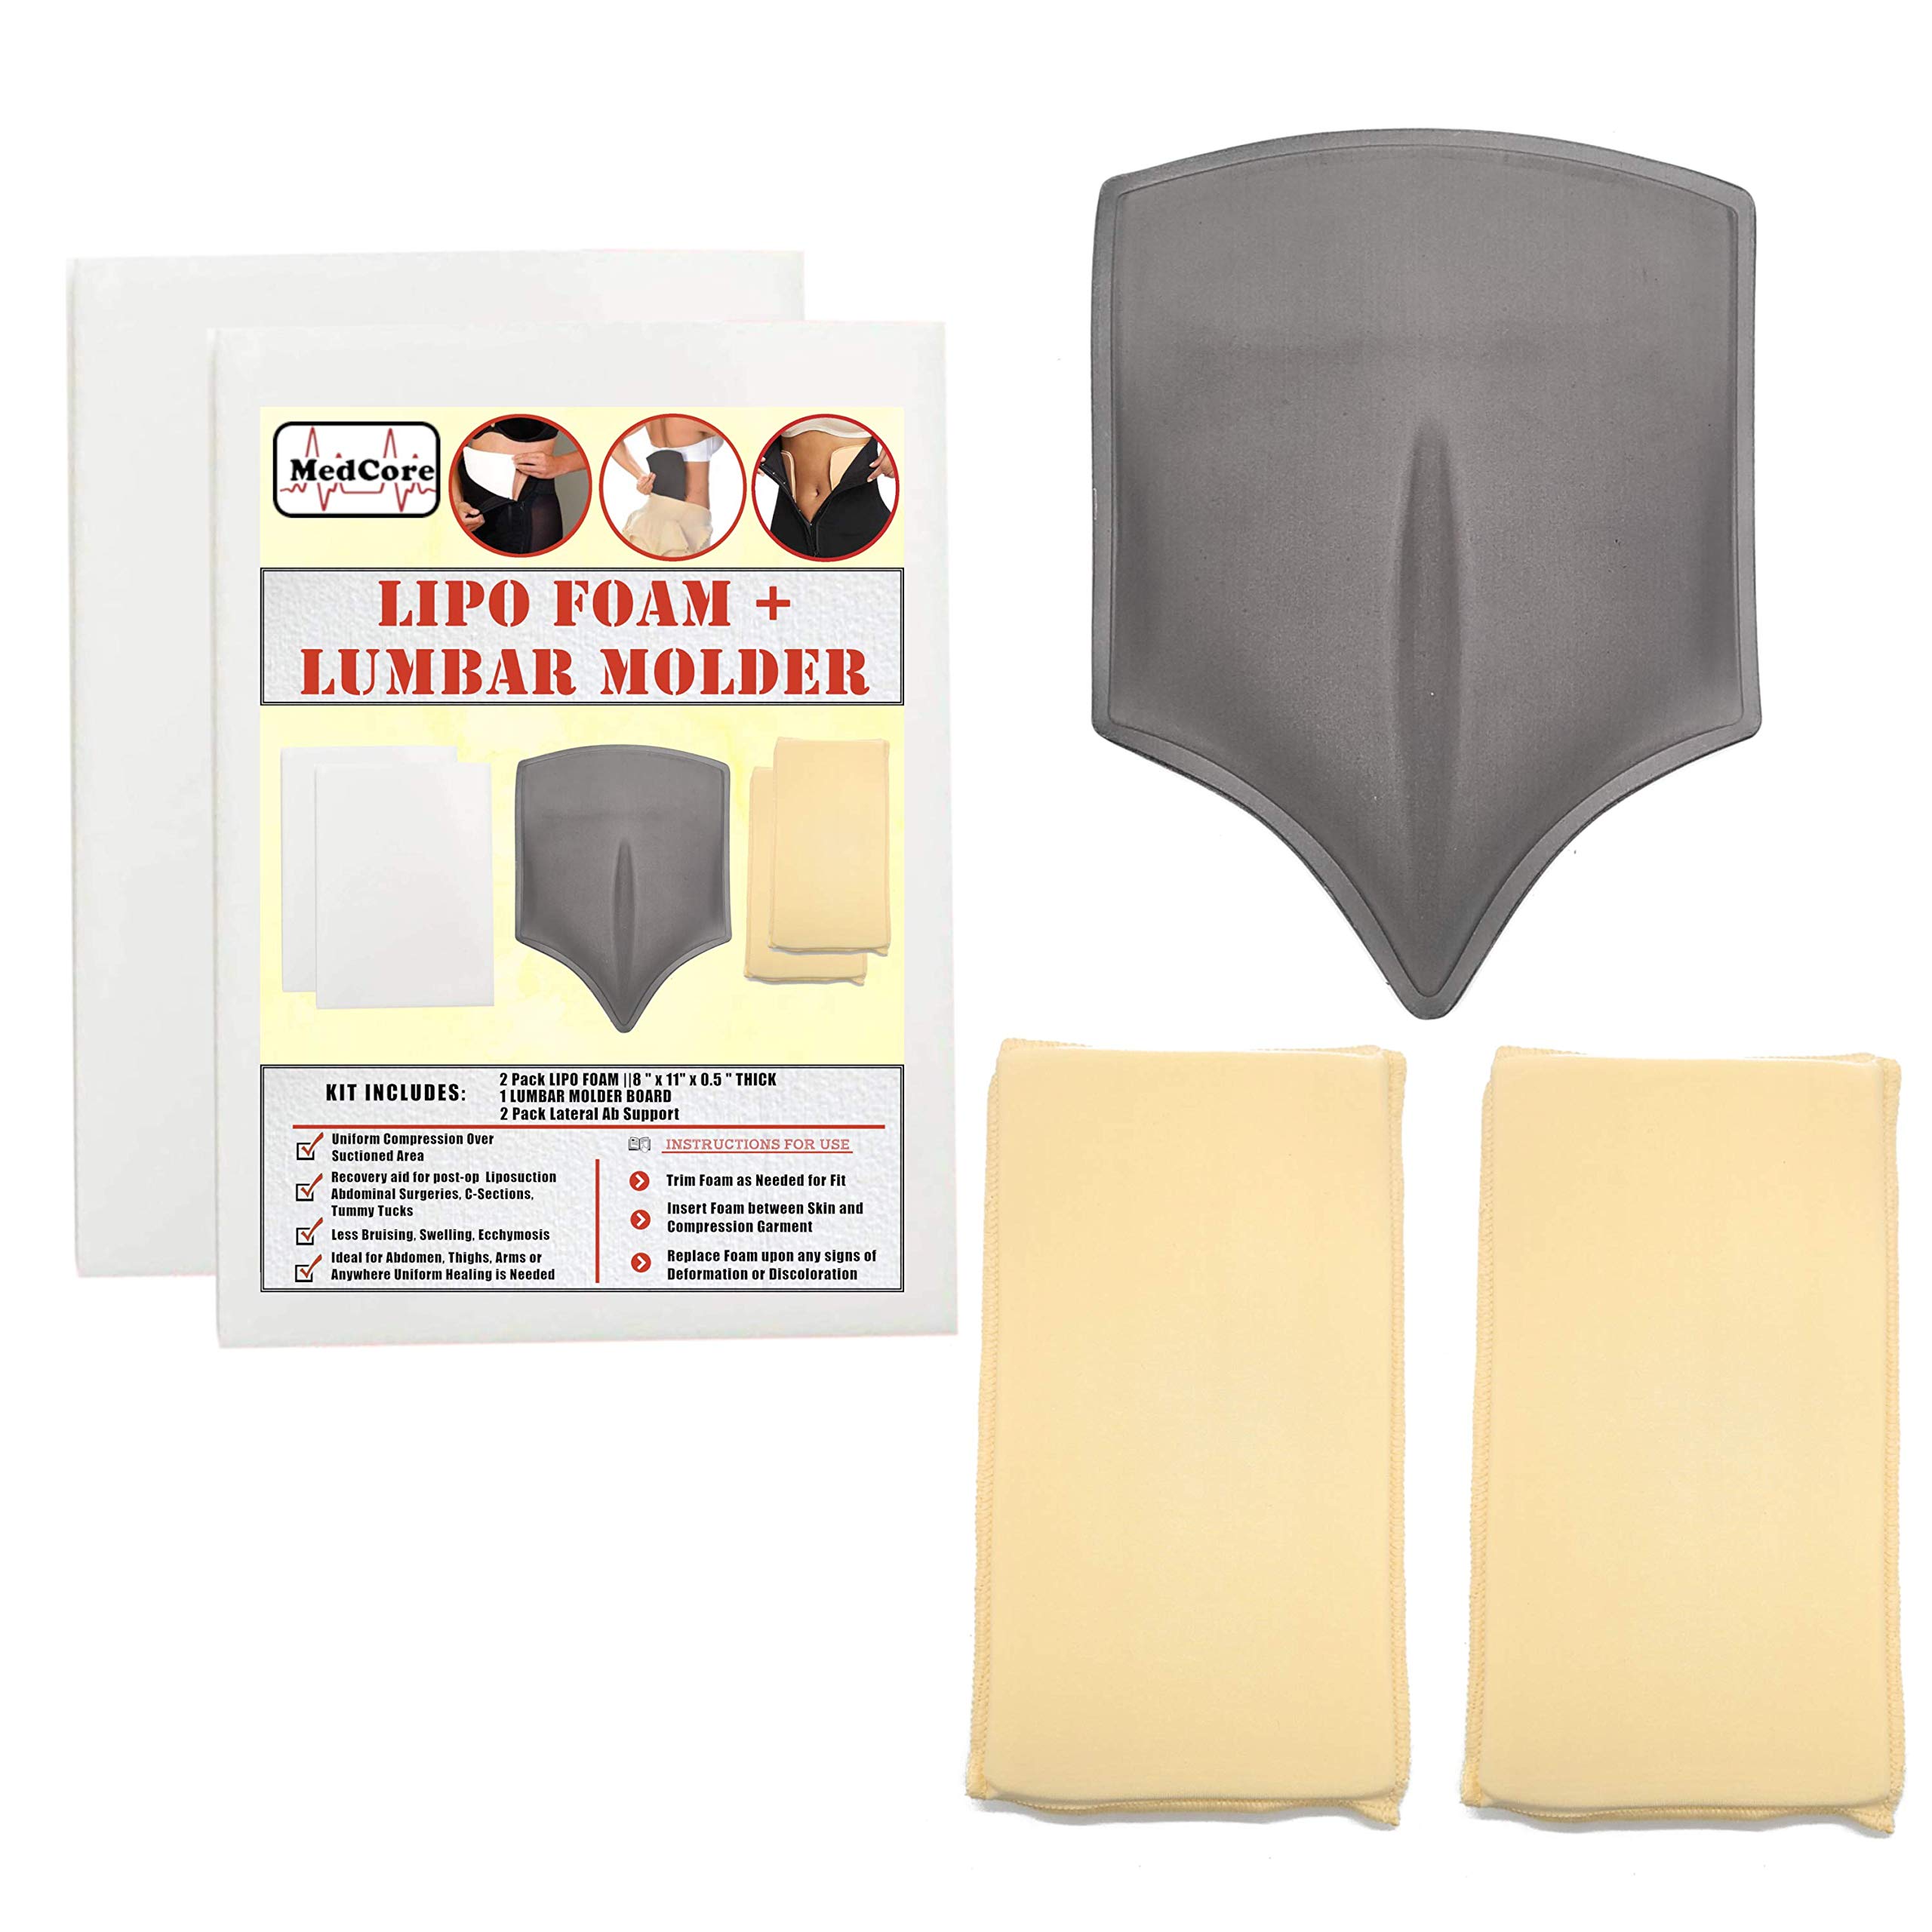 Medcore Lipo Foam Post Surgery Kit : 2 Lip foam boards 1 Lumbar Molder Back  Compression Board 2 Ab boards Liposuction C-Section tummy tucks Brazilian  Butt Lifts